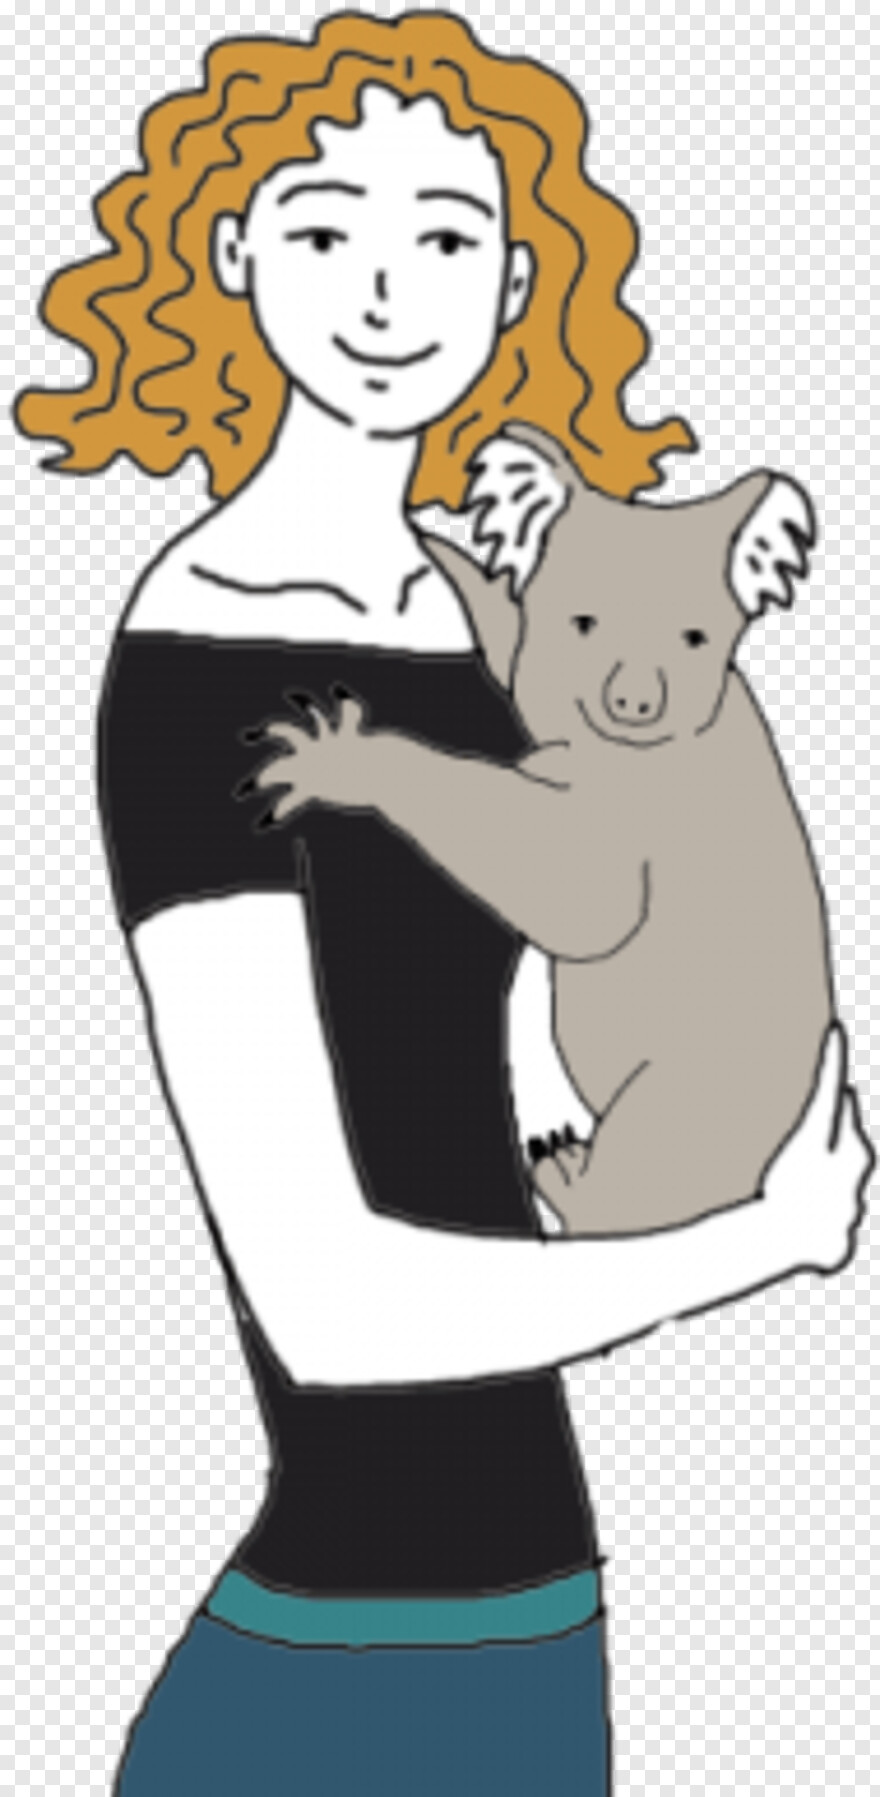 bears-logo # 386980